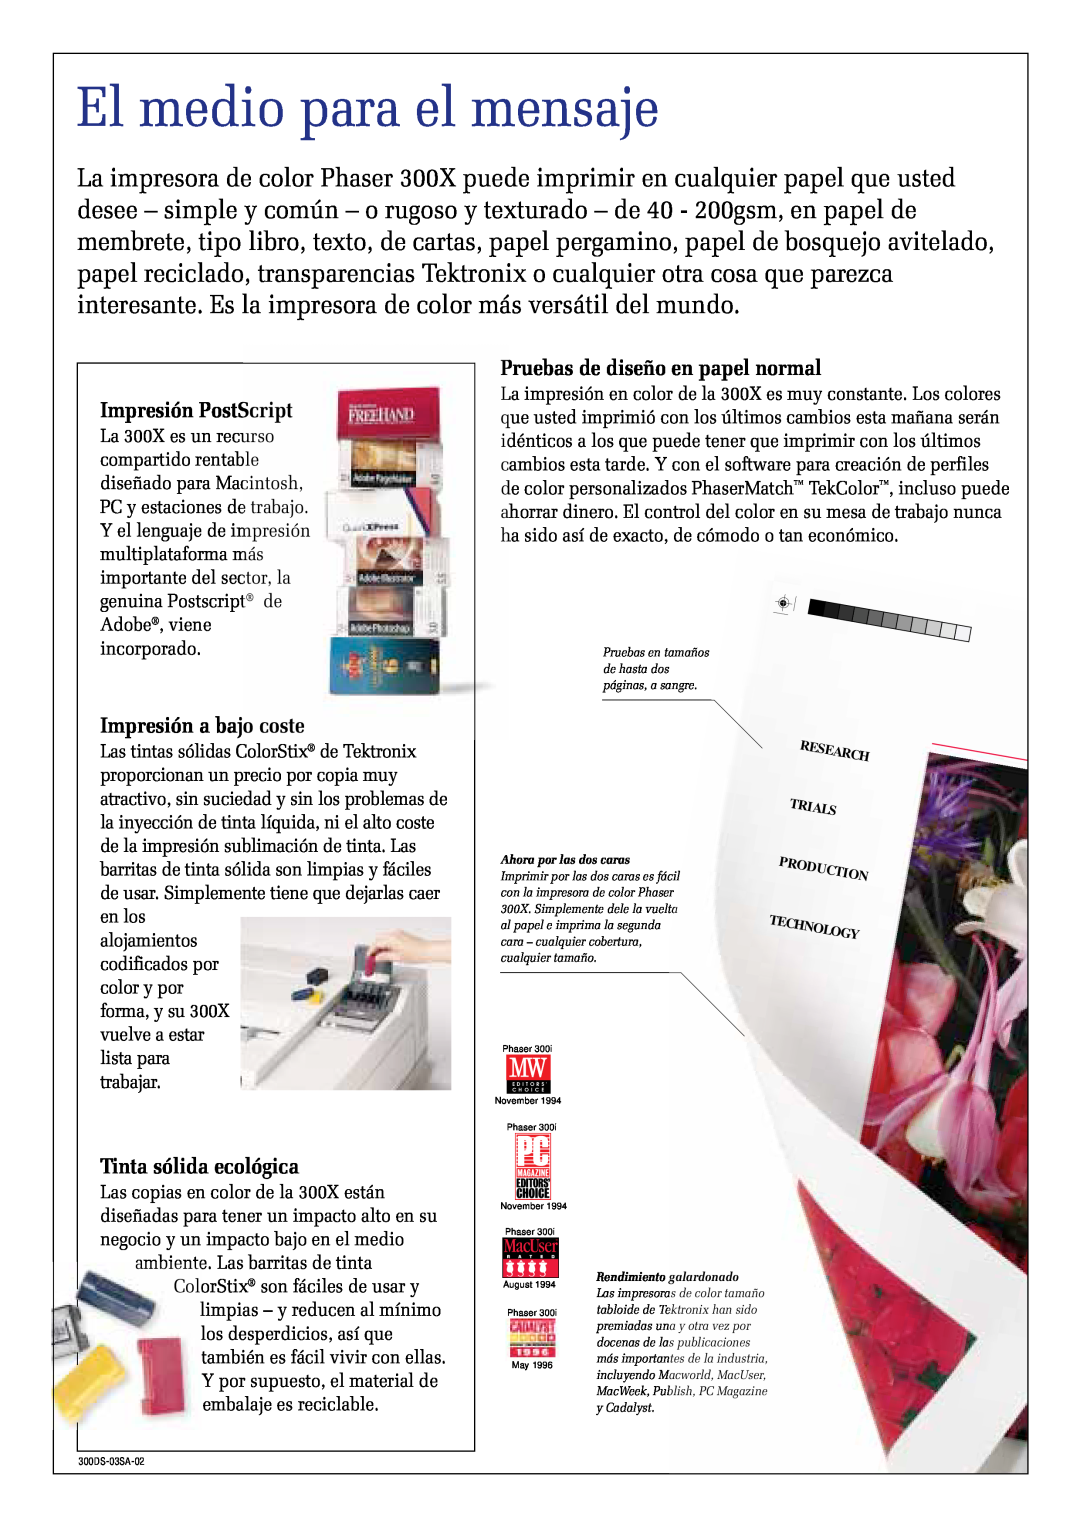 Tektronix 300X Impresión PostScript, Impresión a bajo coste, Pruebas de diseño en papel normal, Tinta sólida ecológica 